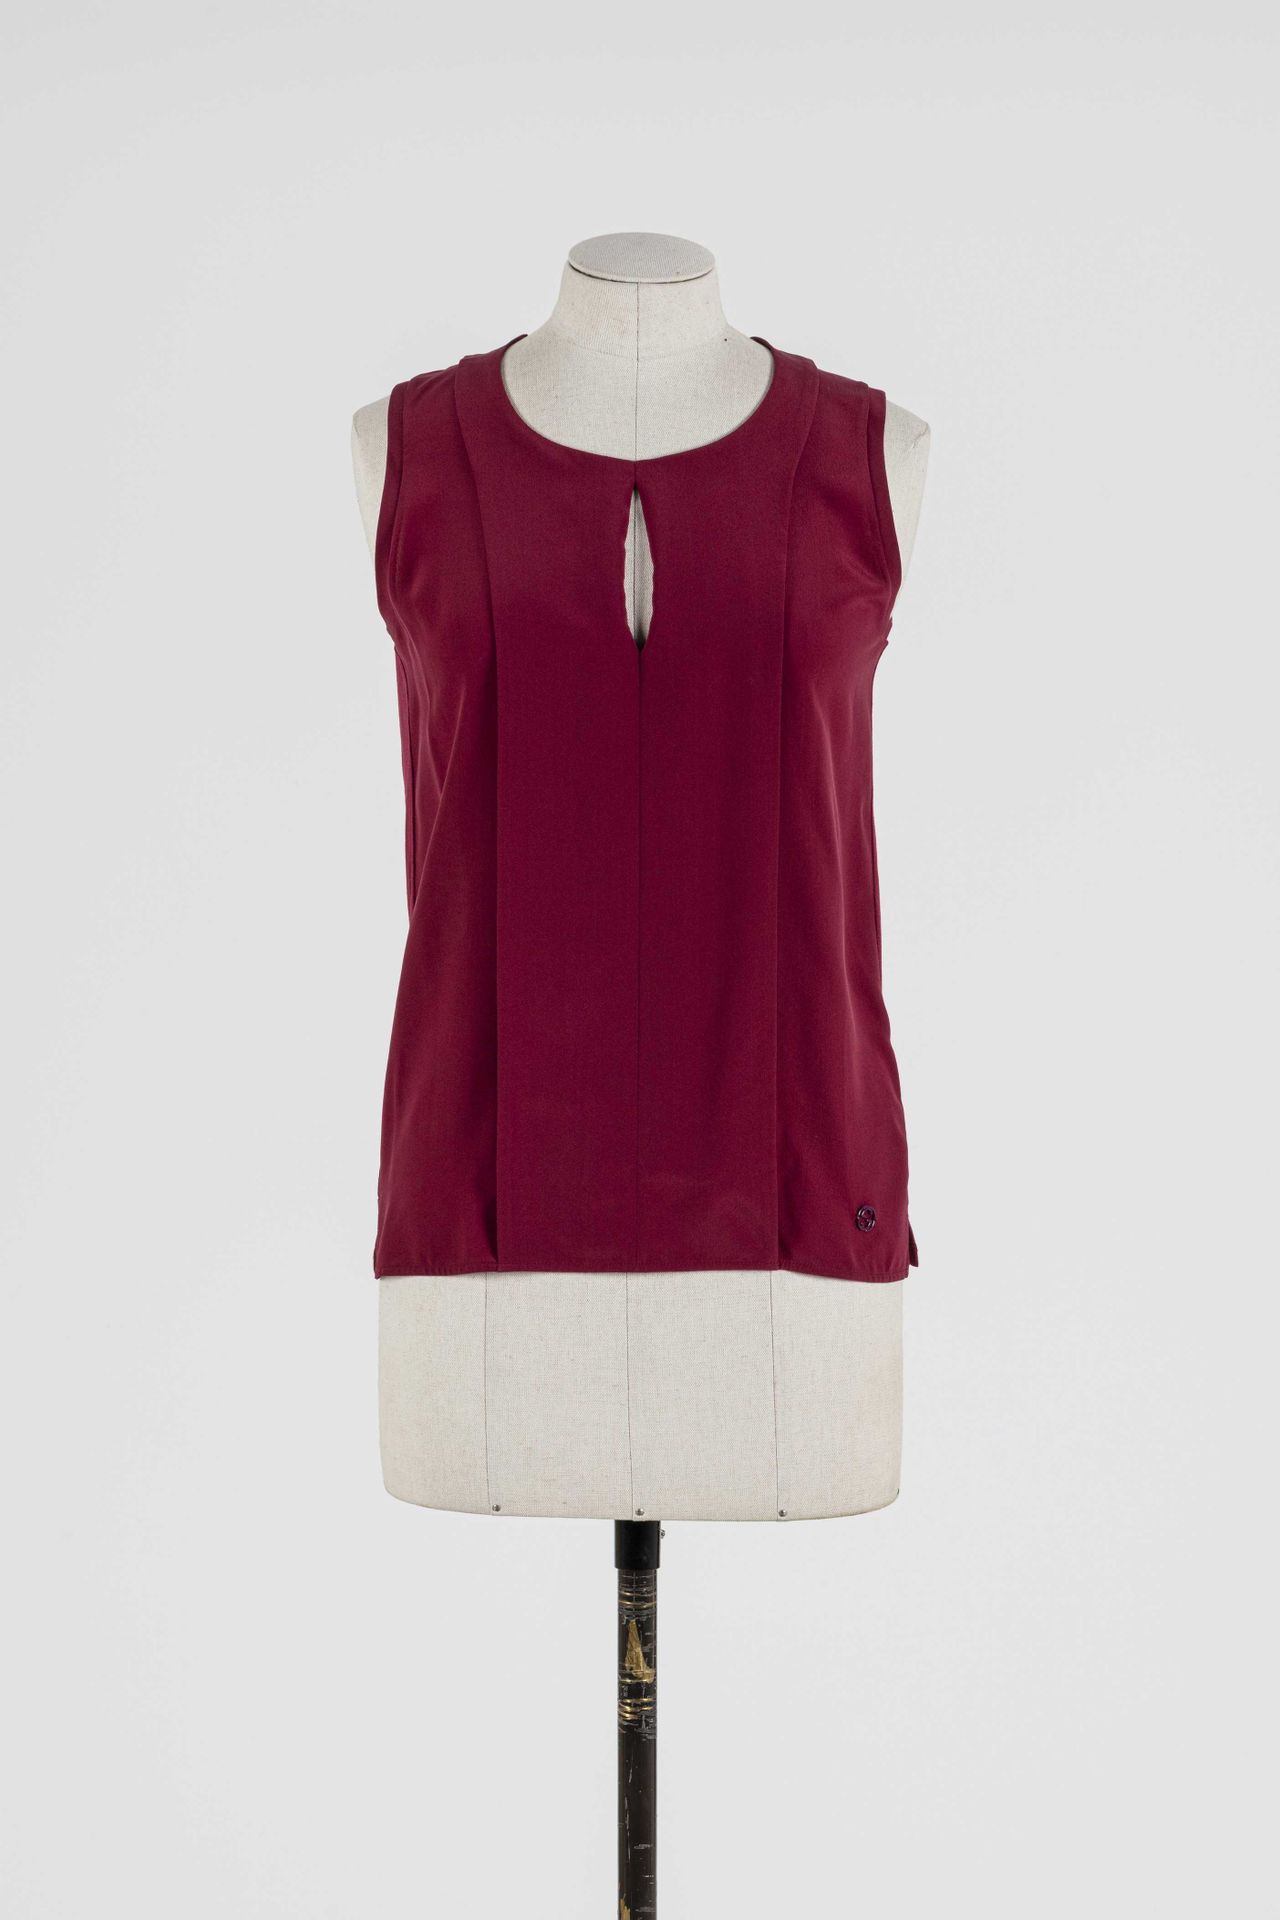 Null GUCCI：酒红色羊毛和丝绸的无袖上衣，前面有袖口的效果。

S.T.